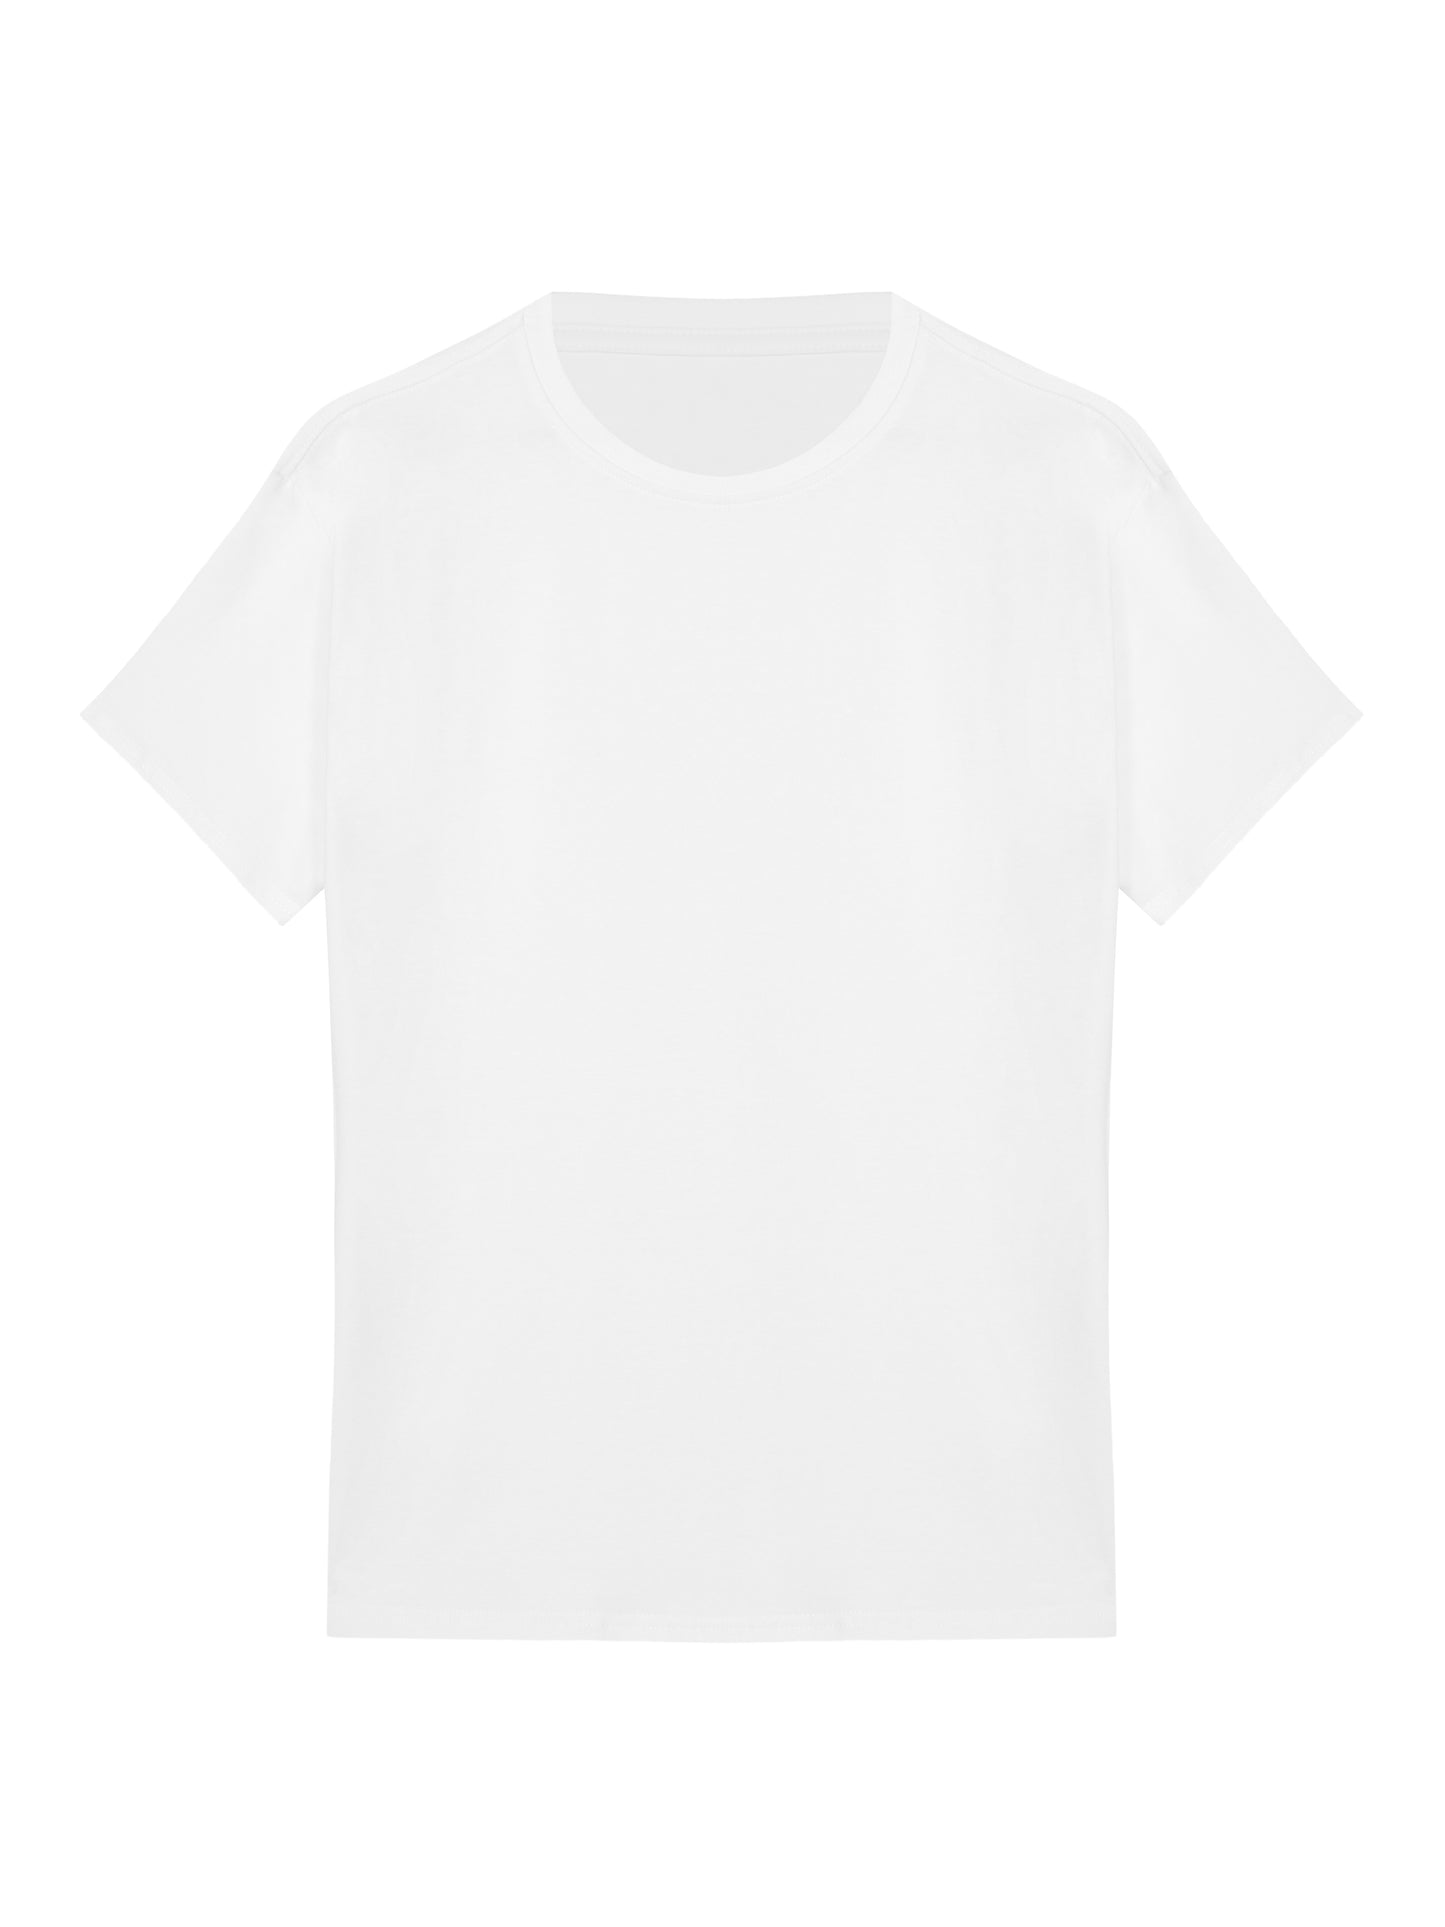 White T-shirt INDPOSHIV CASUAL